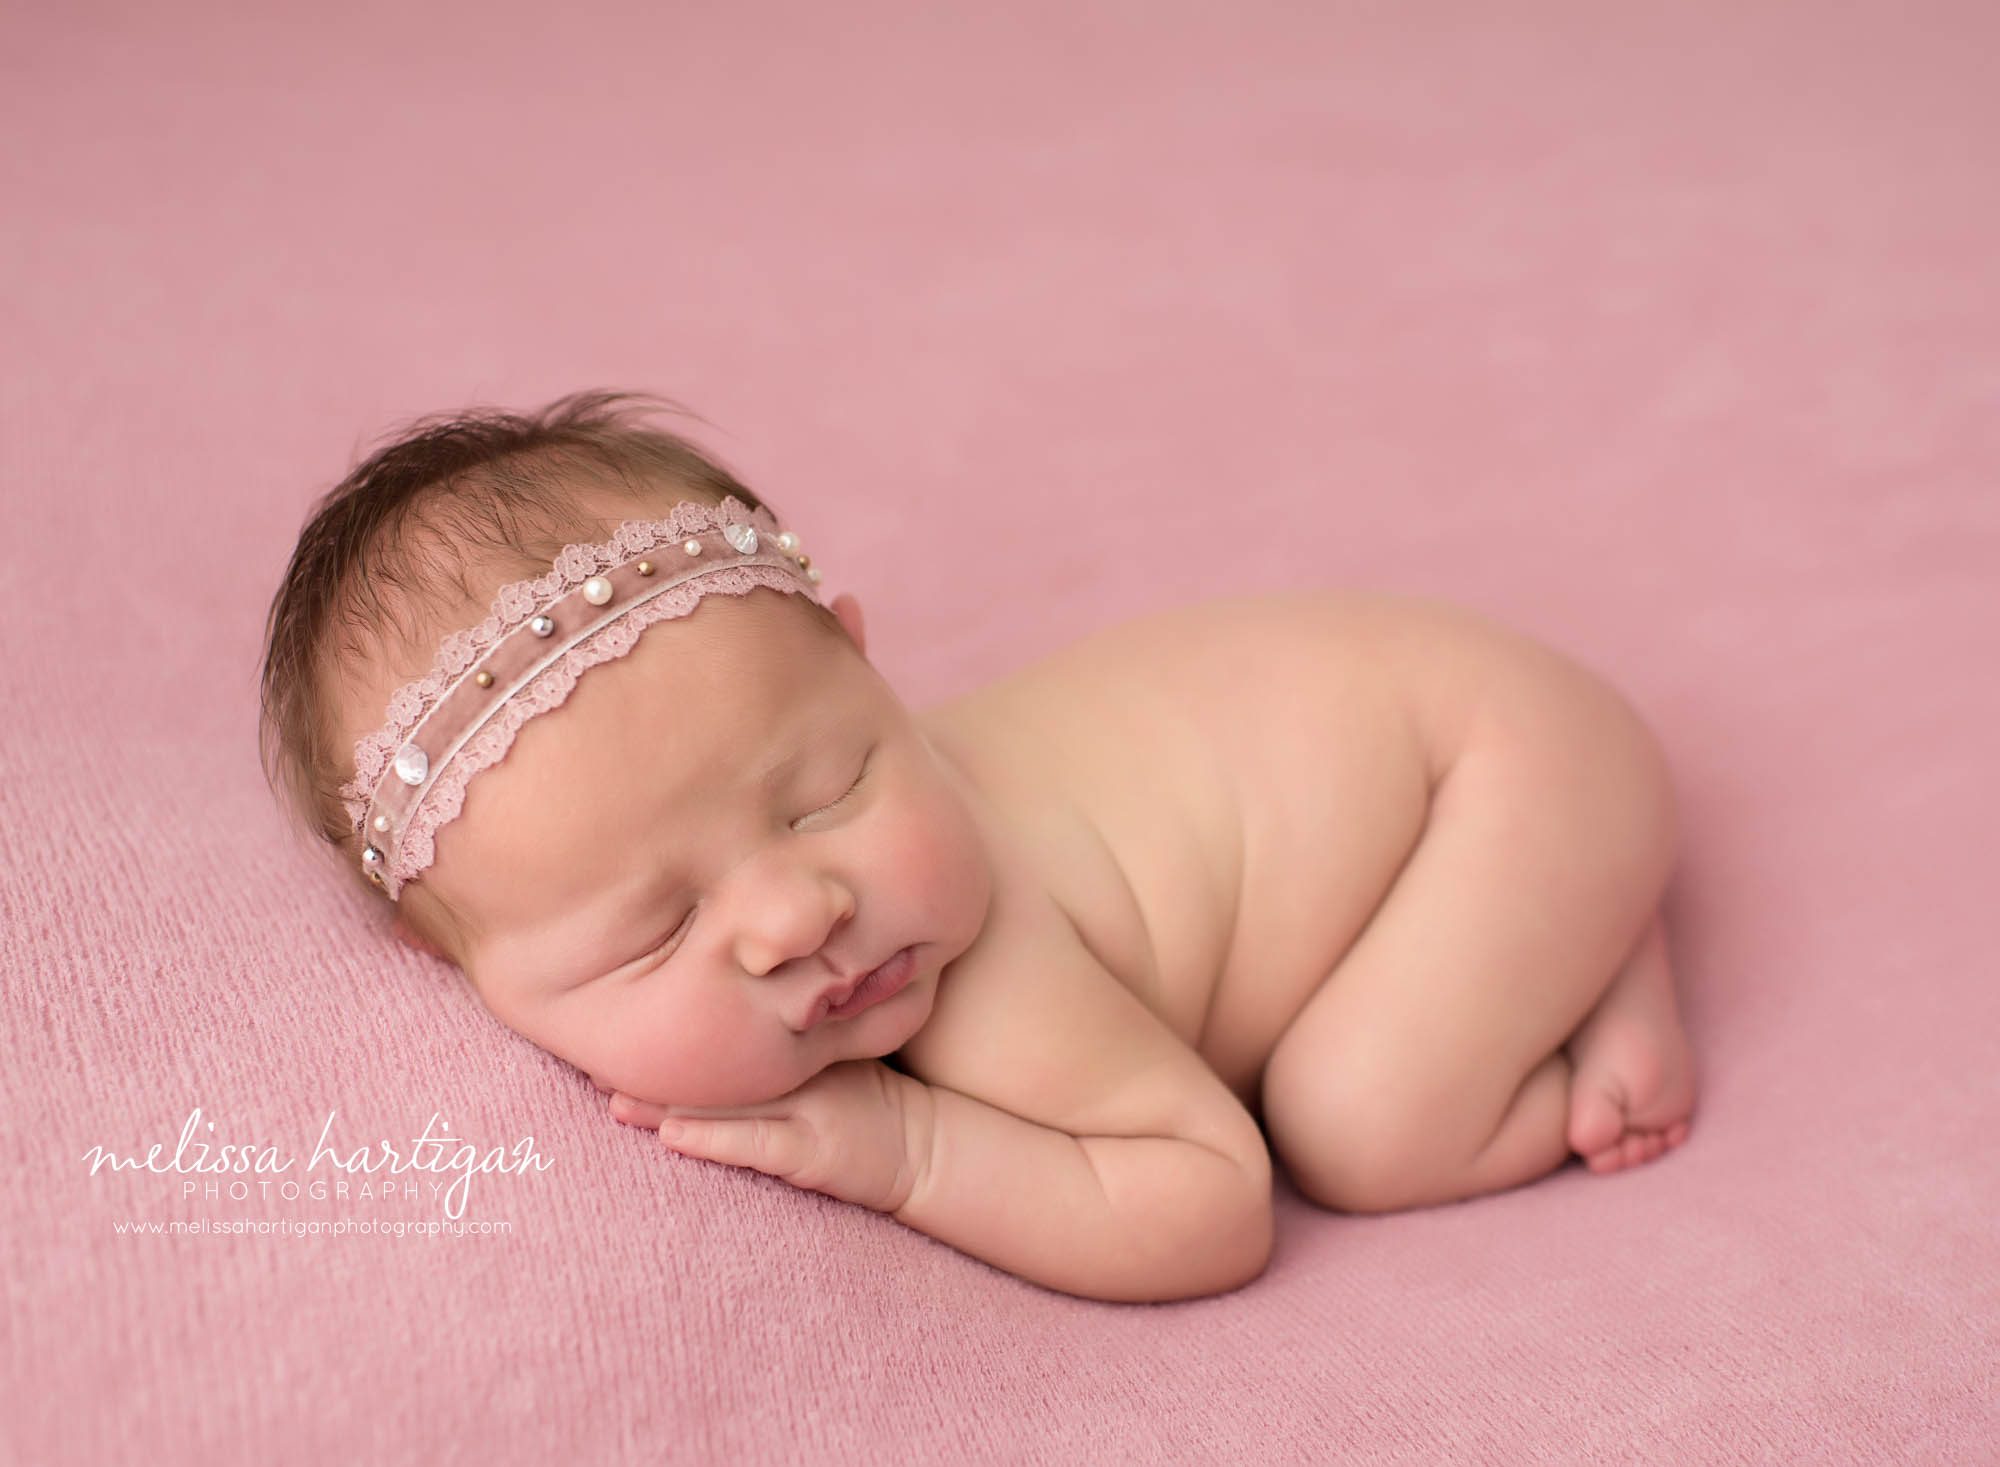 newborn baby girl posed in pink backdrop wearing pearl headband